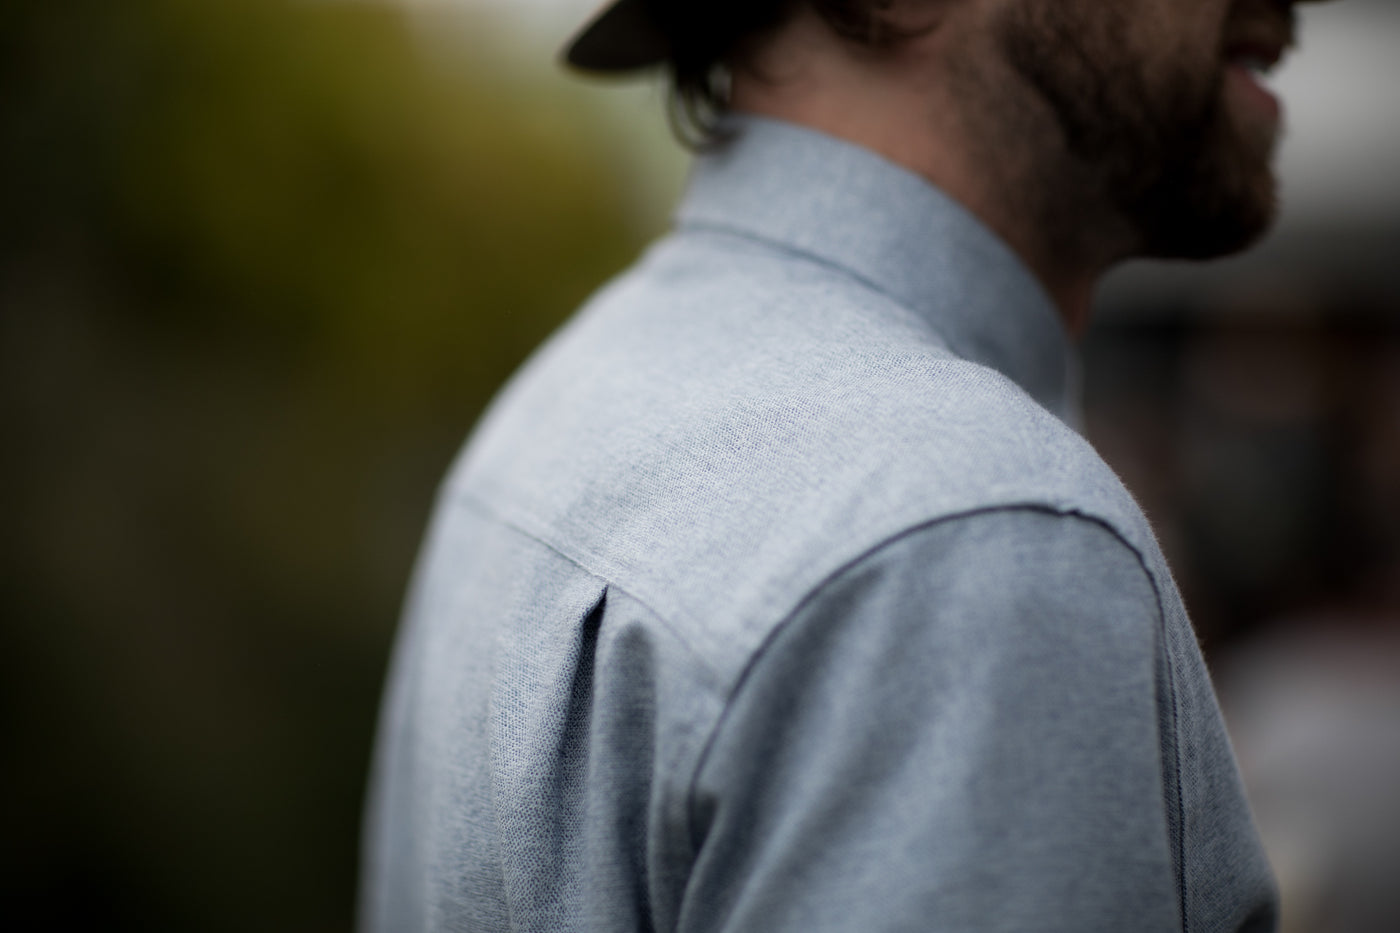 Men's Cascade Flannel Shirt - Dusty Blue